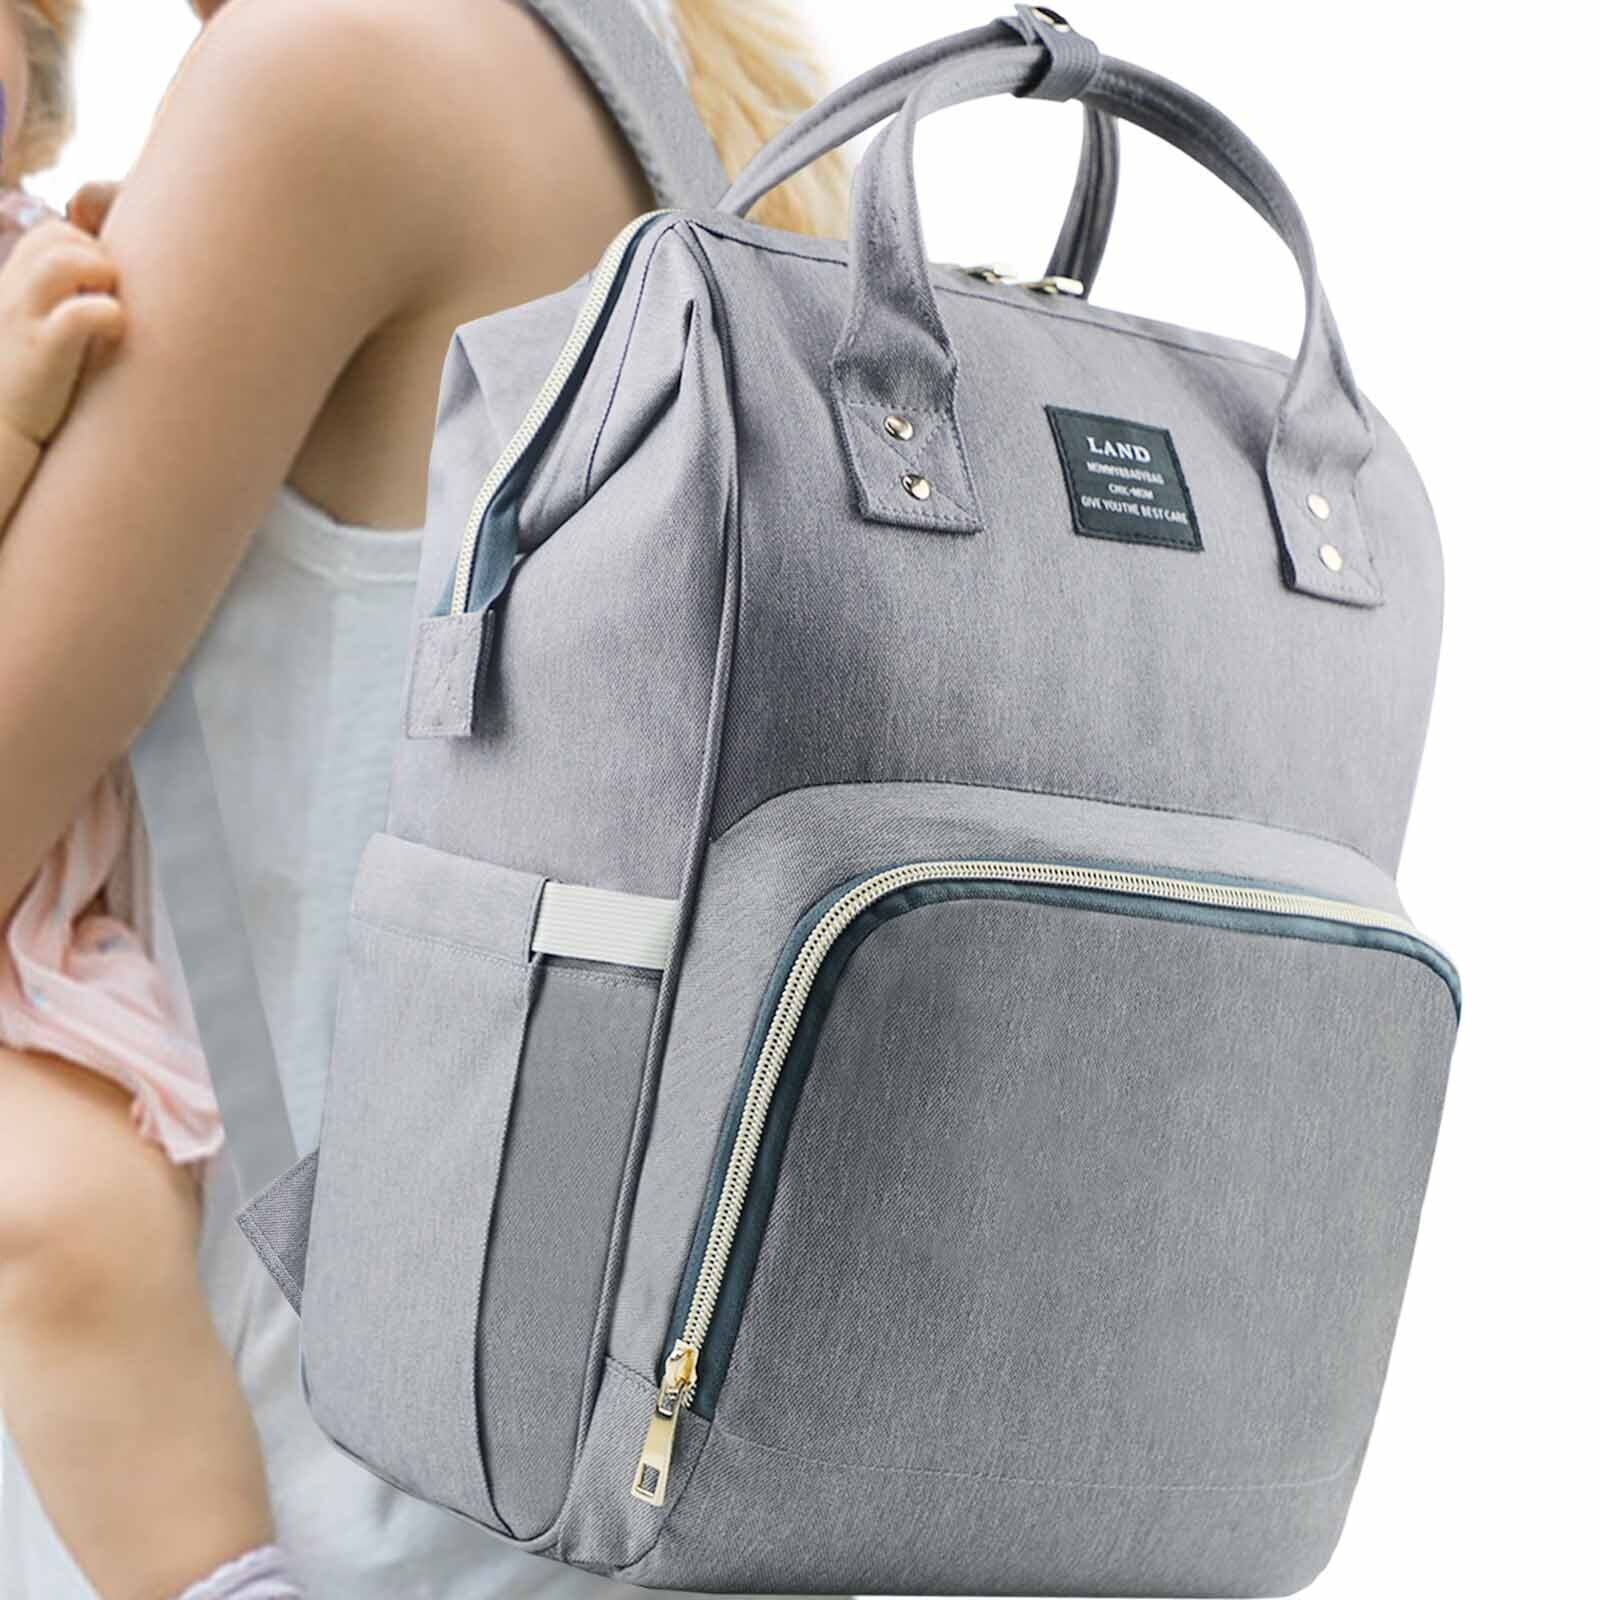 Ticent Diaper Bag Multi-Function Waterproof Travel Backpack more, Black 